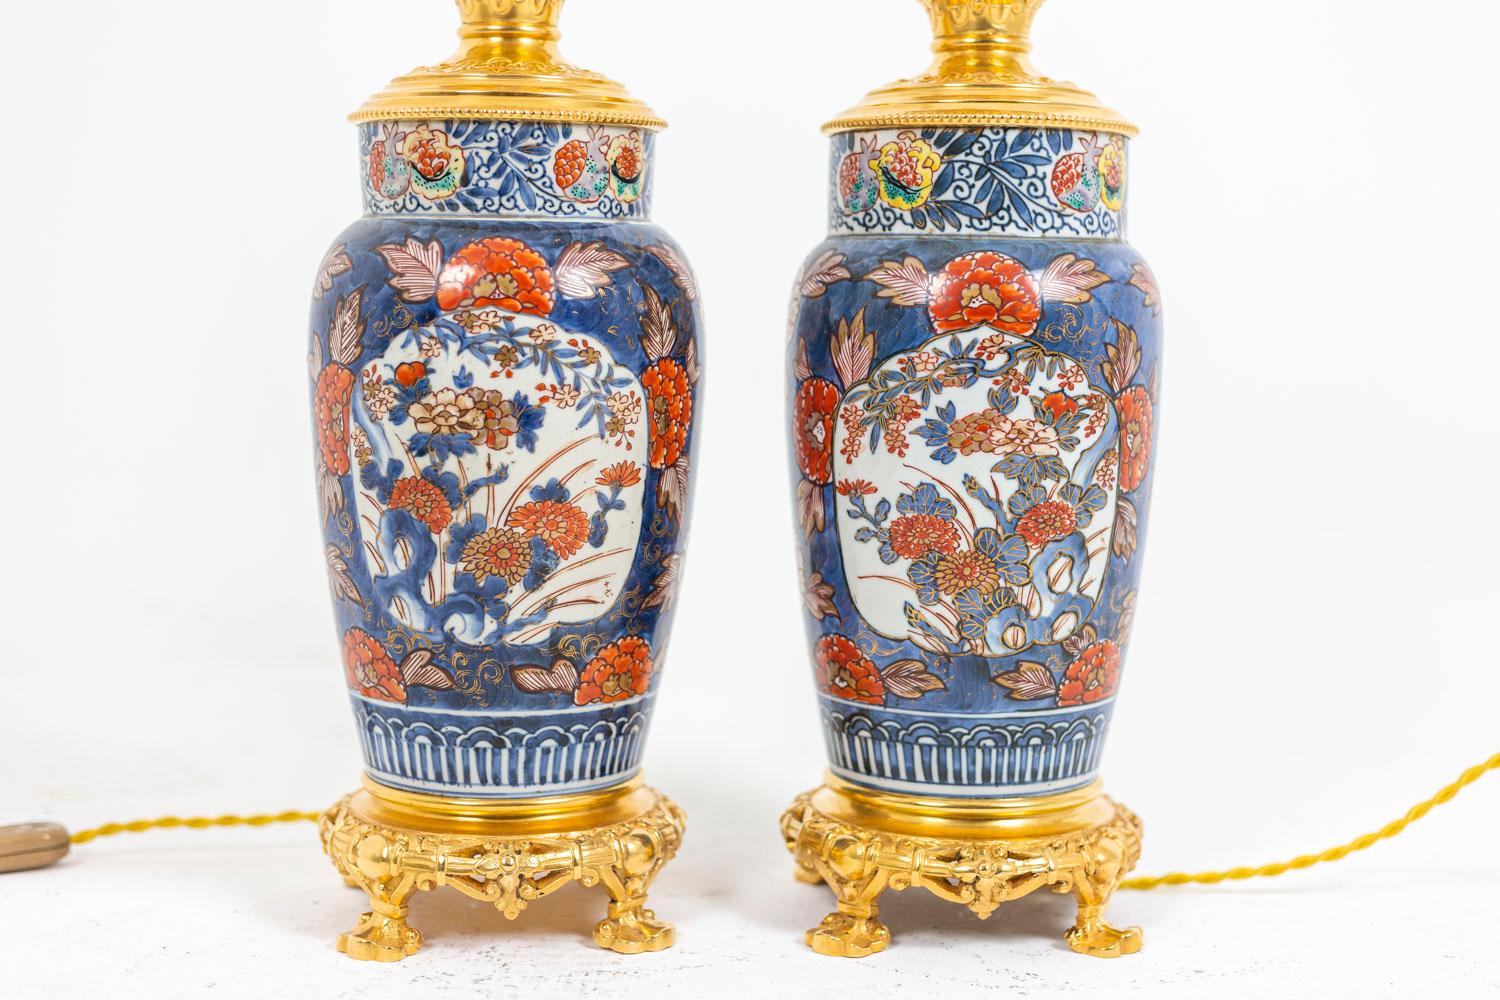 Late 19th Century Pair of Lamps in Imari Porcelain and Gilt Bronze, circa 1880